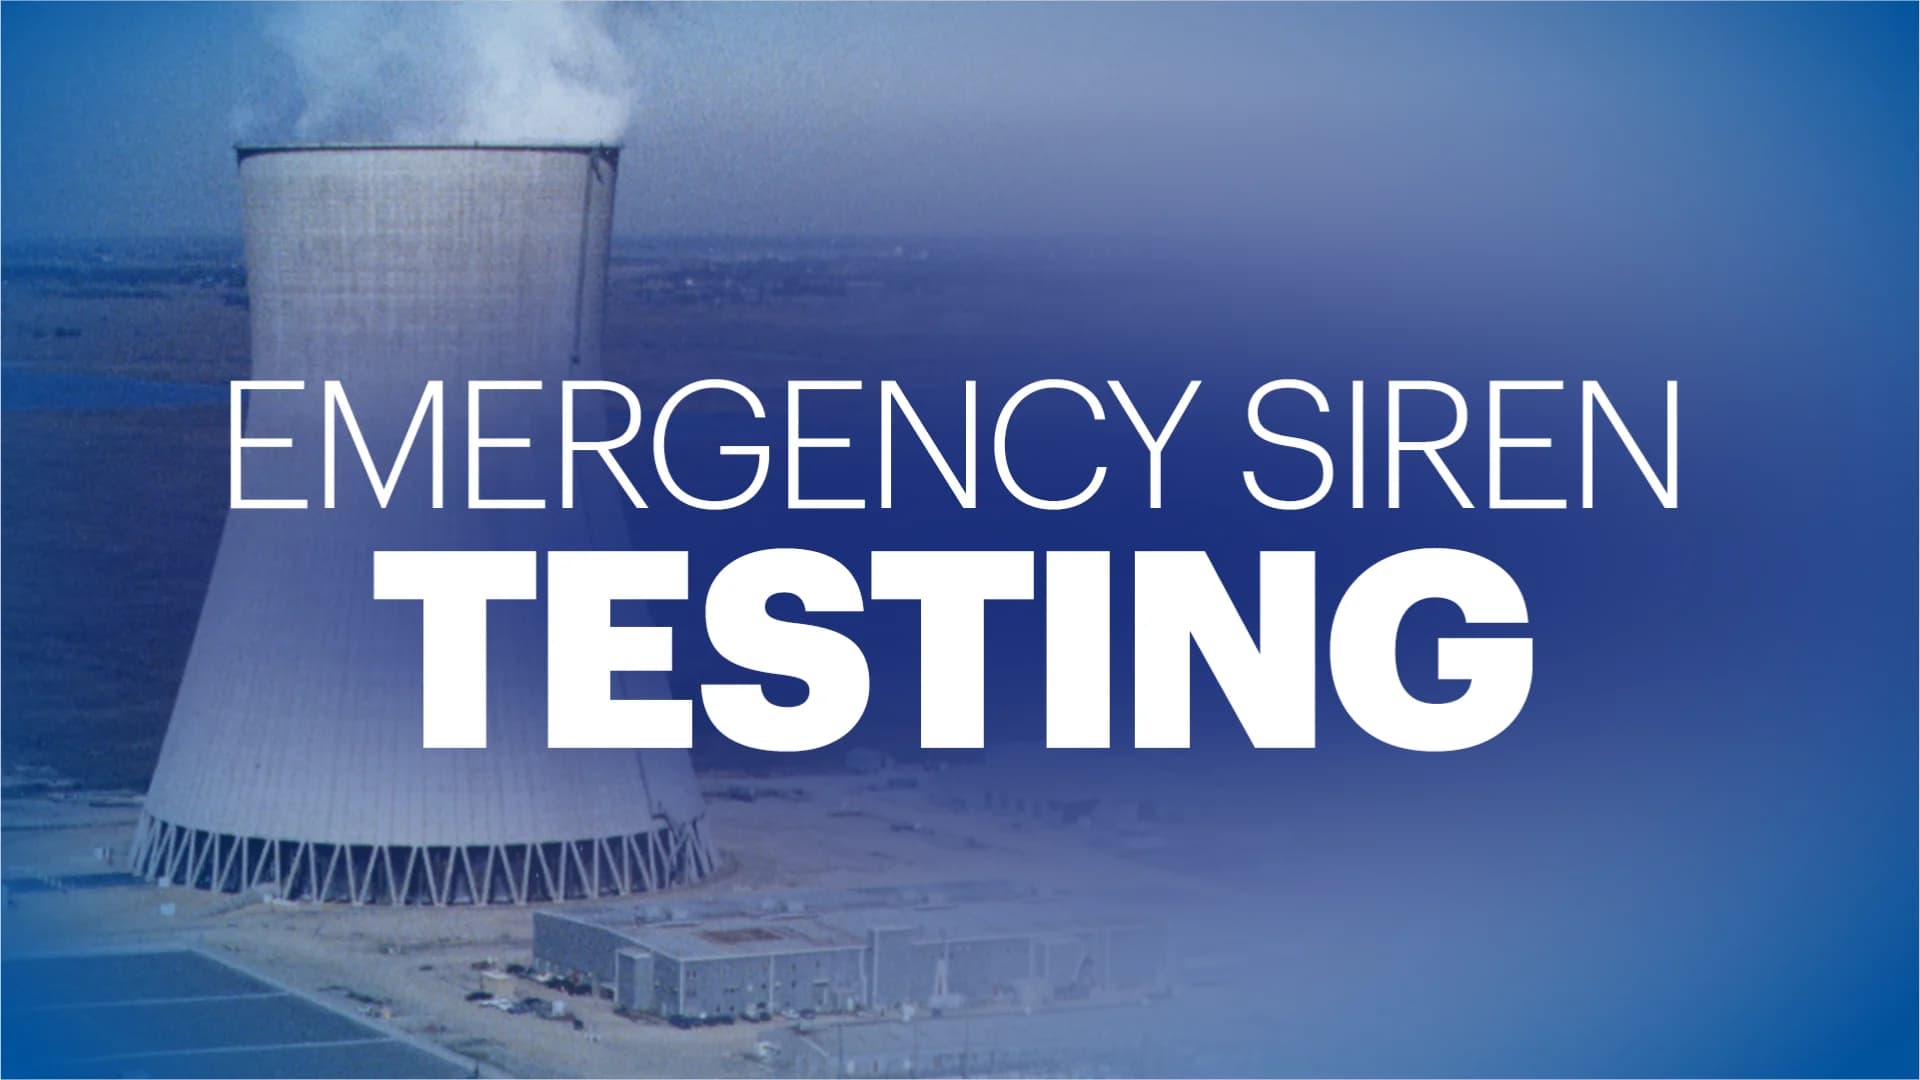 Siren testing taking place Jan. 2 near Salem Hope Creek generating stations